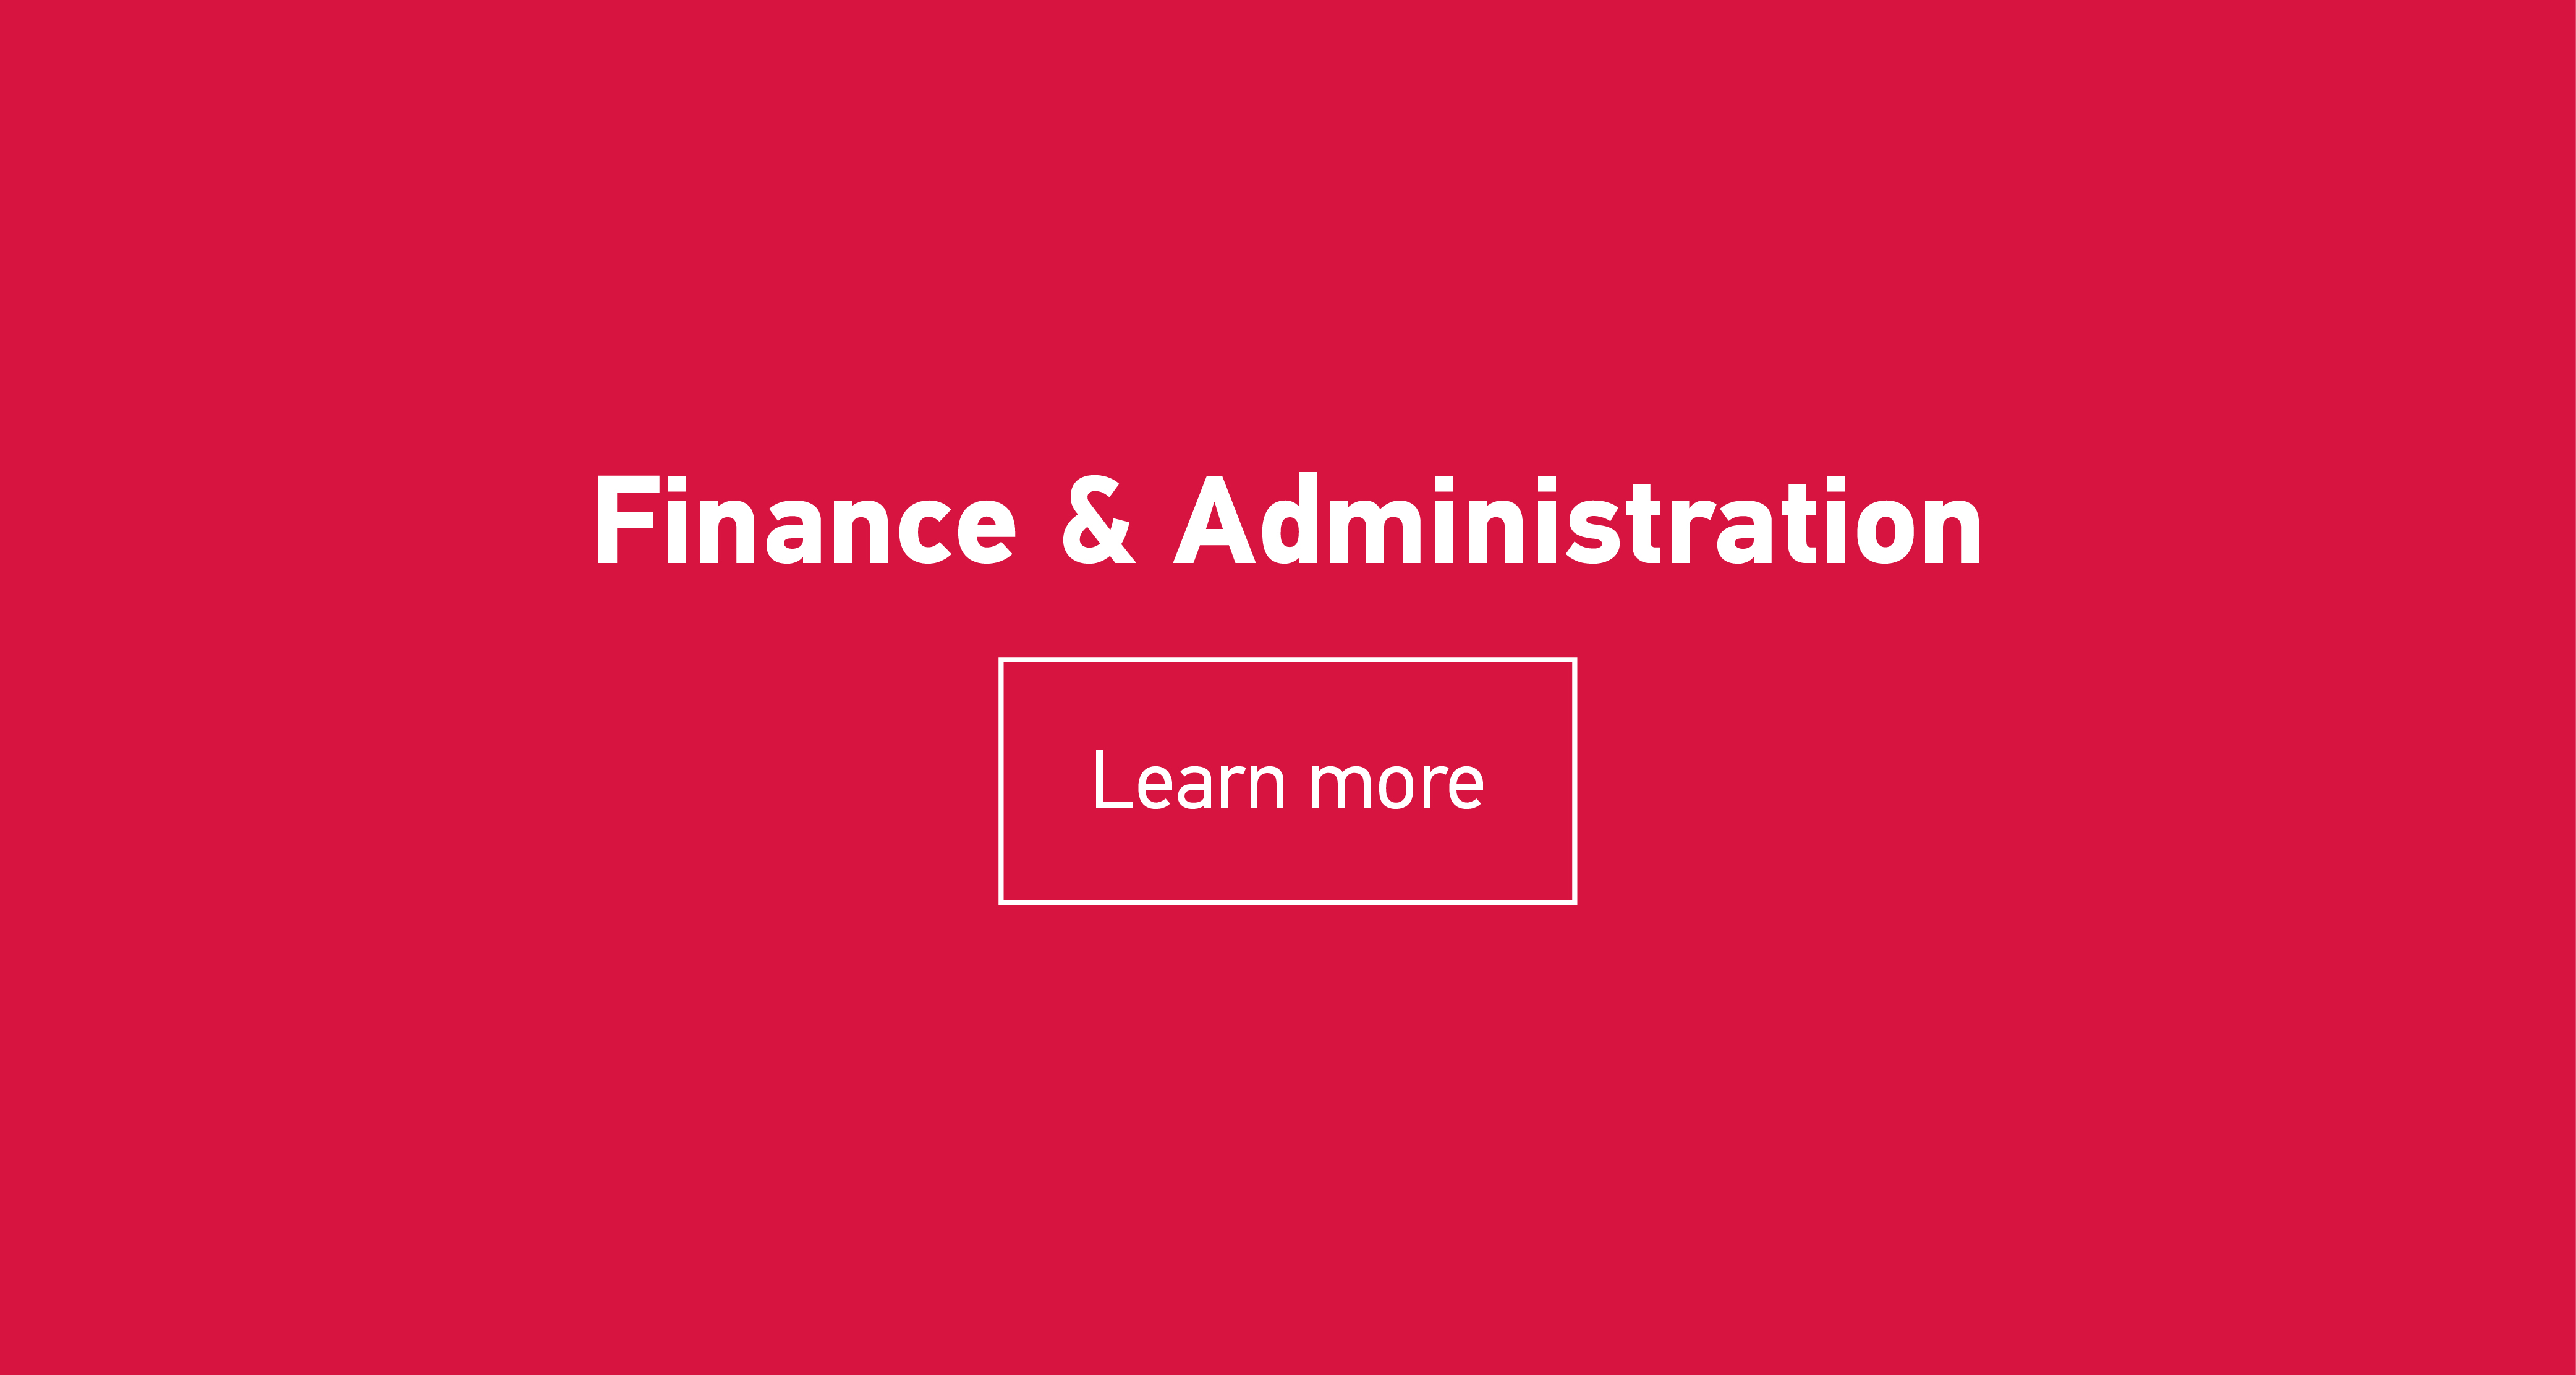 Finance & Administration